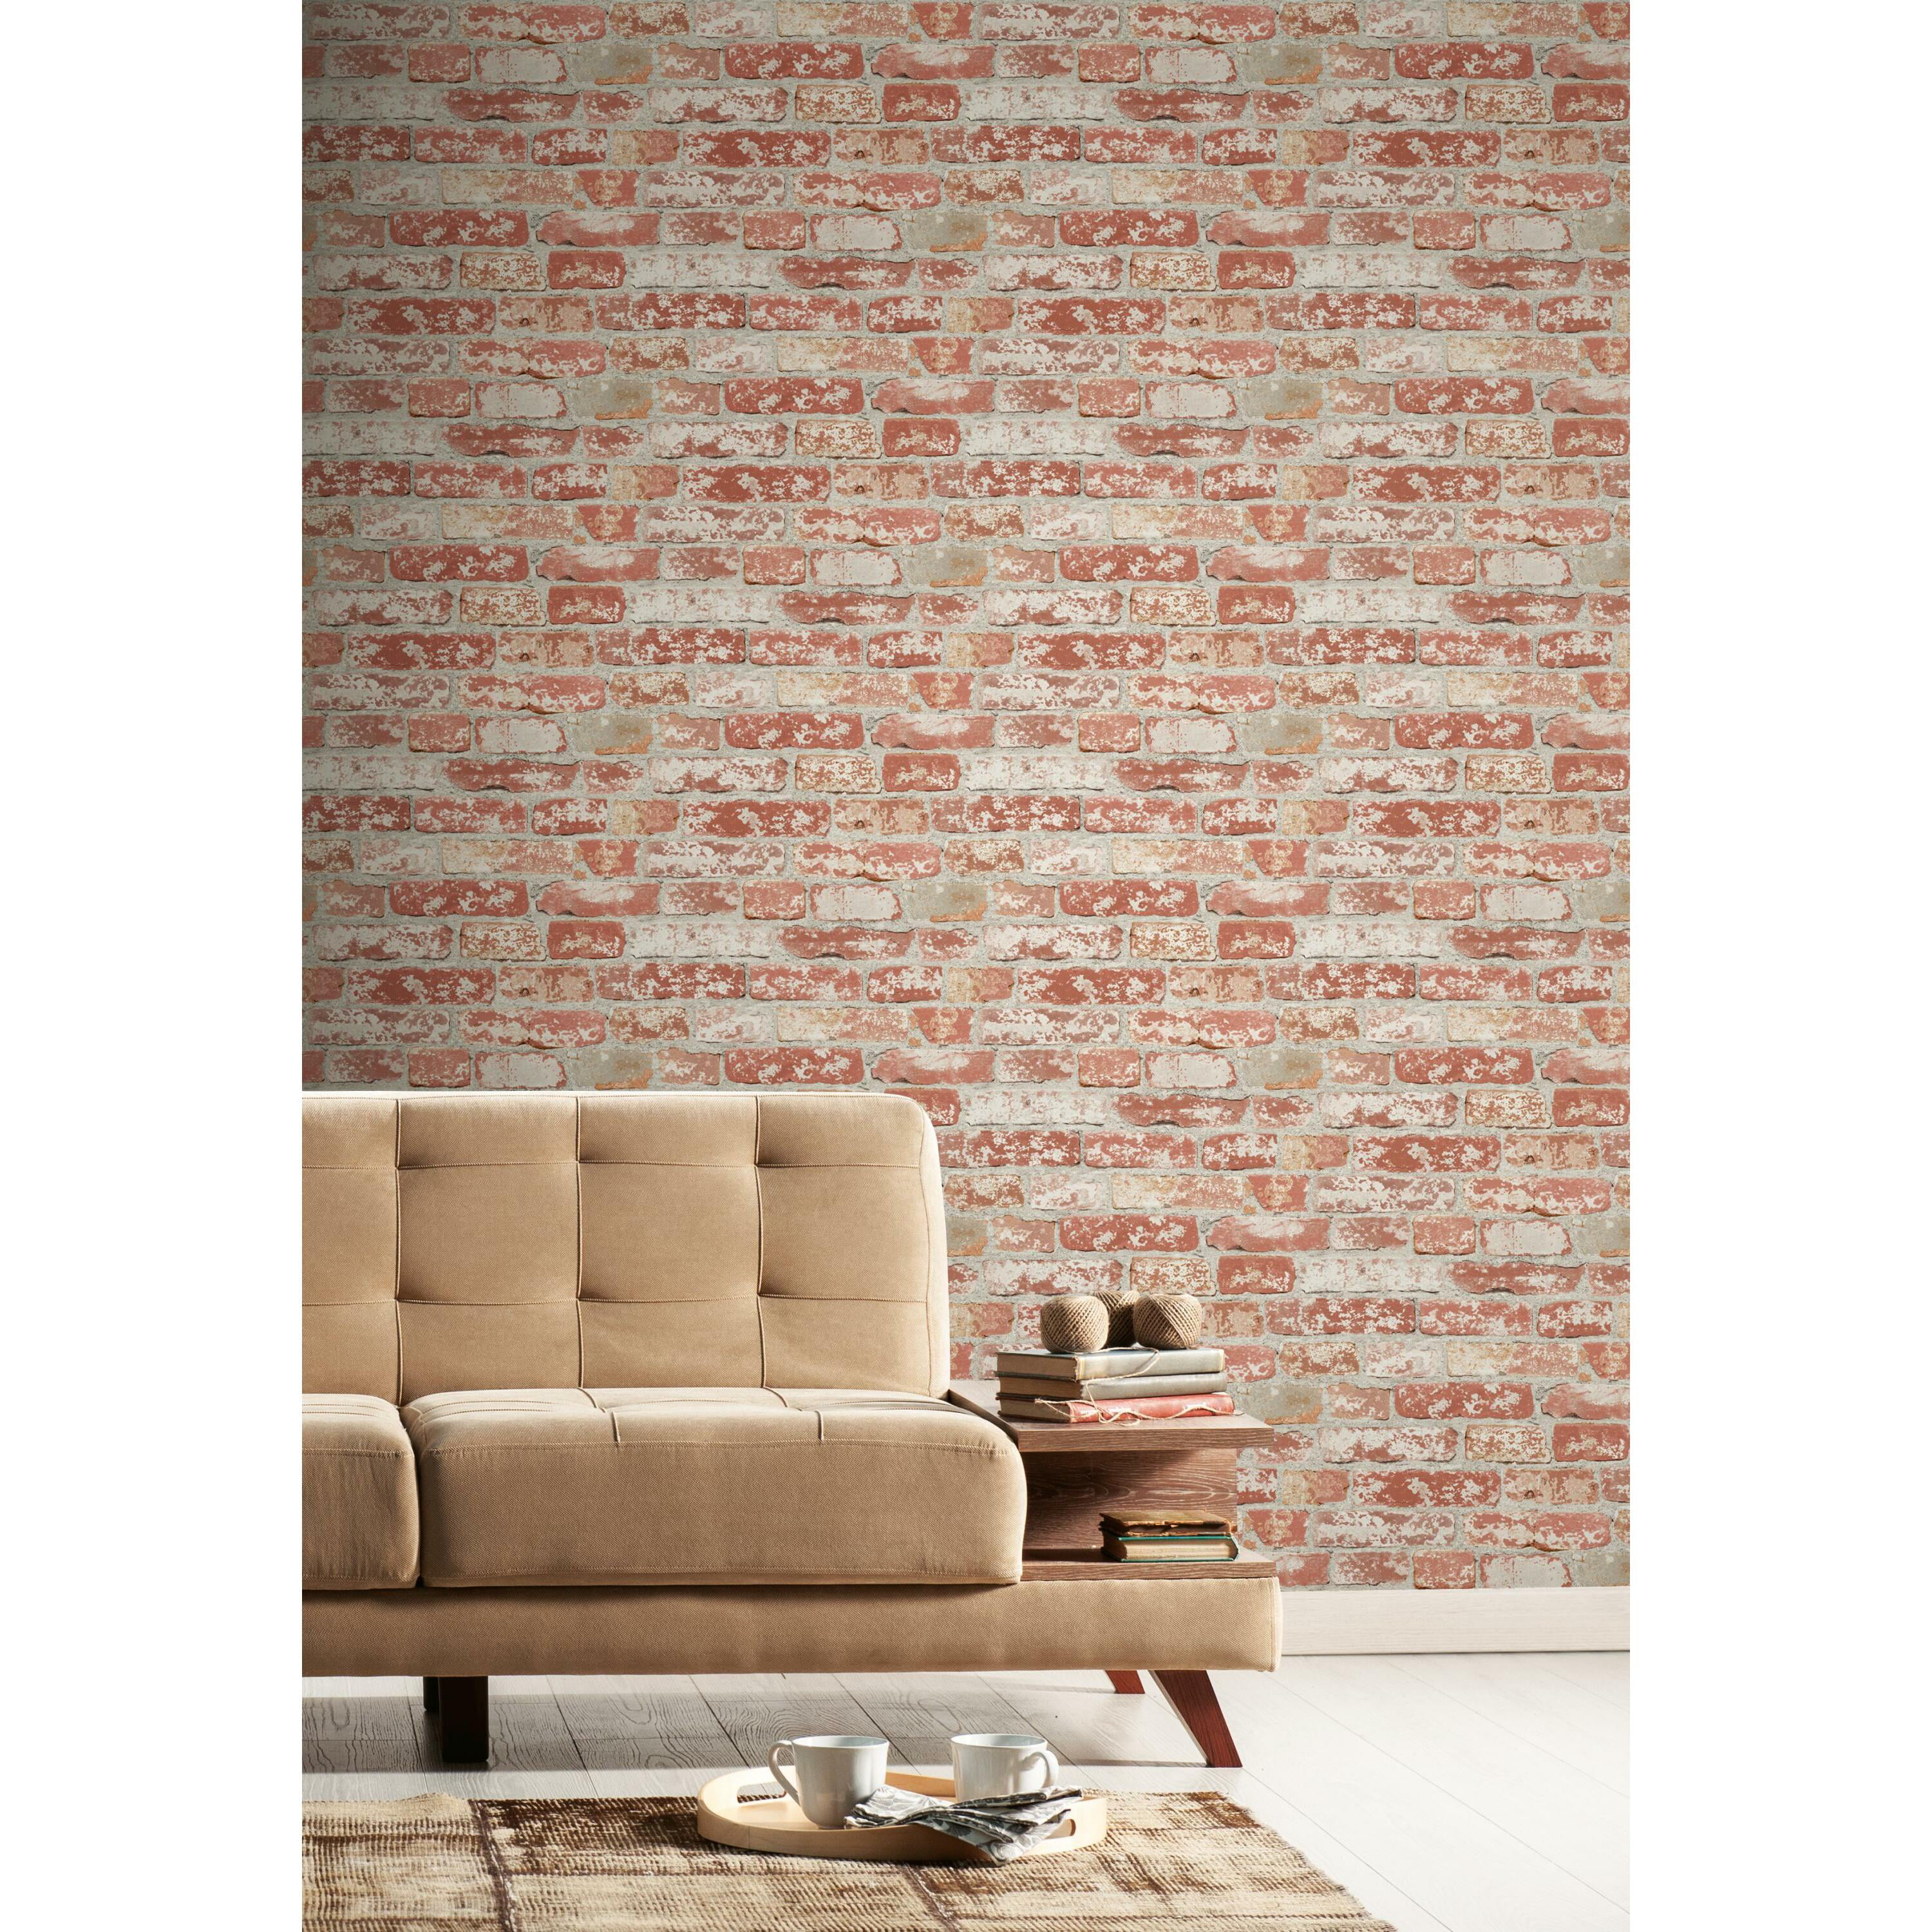 Buy RoomMates Stuccoed Dark Red Brick Peel and Stick Wallpaper Online ...